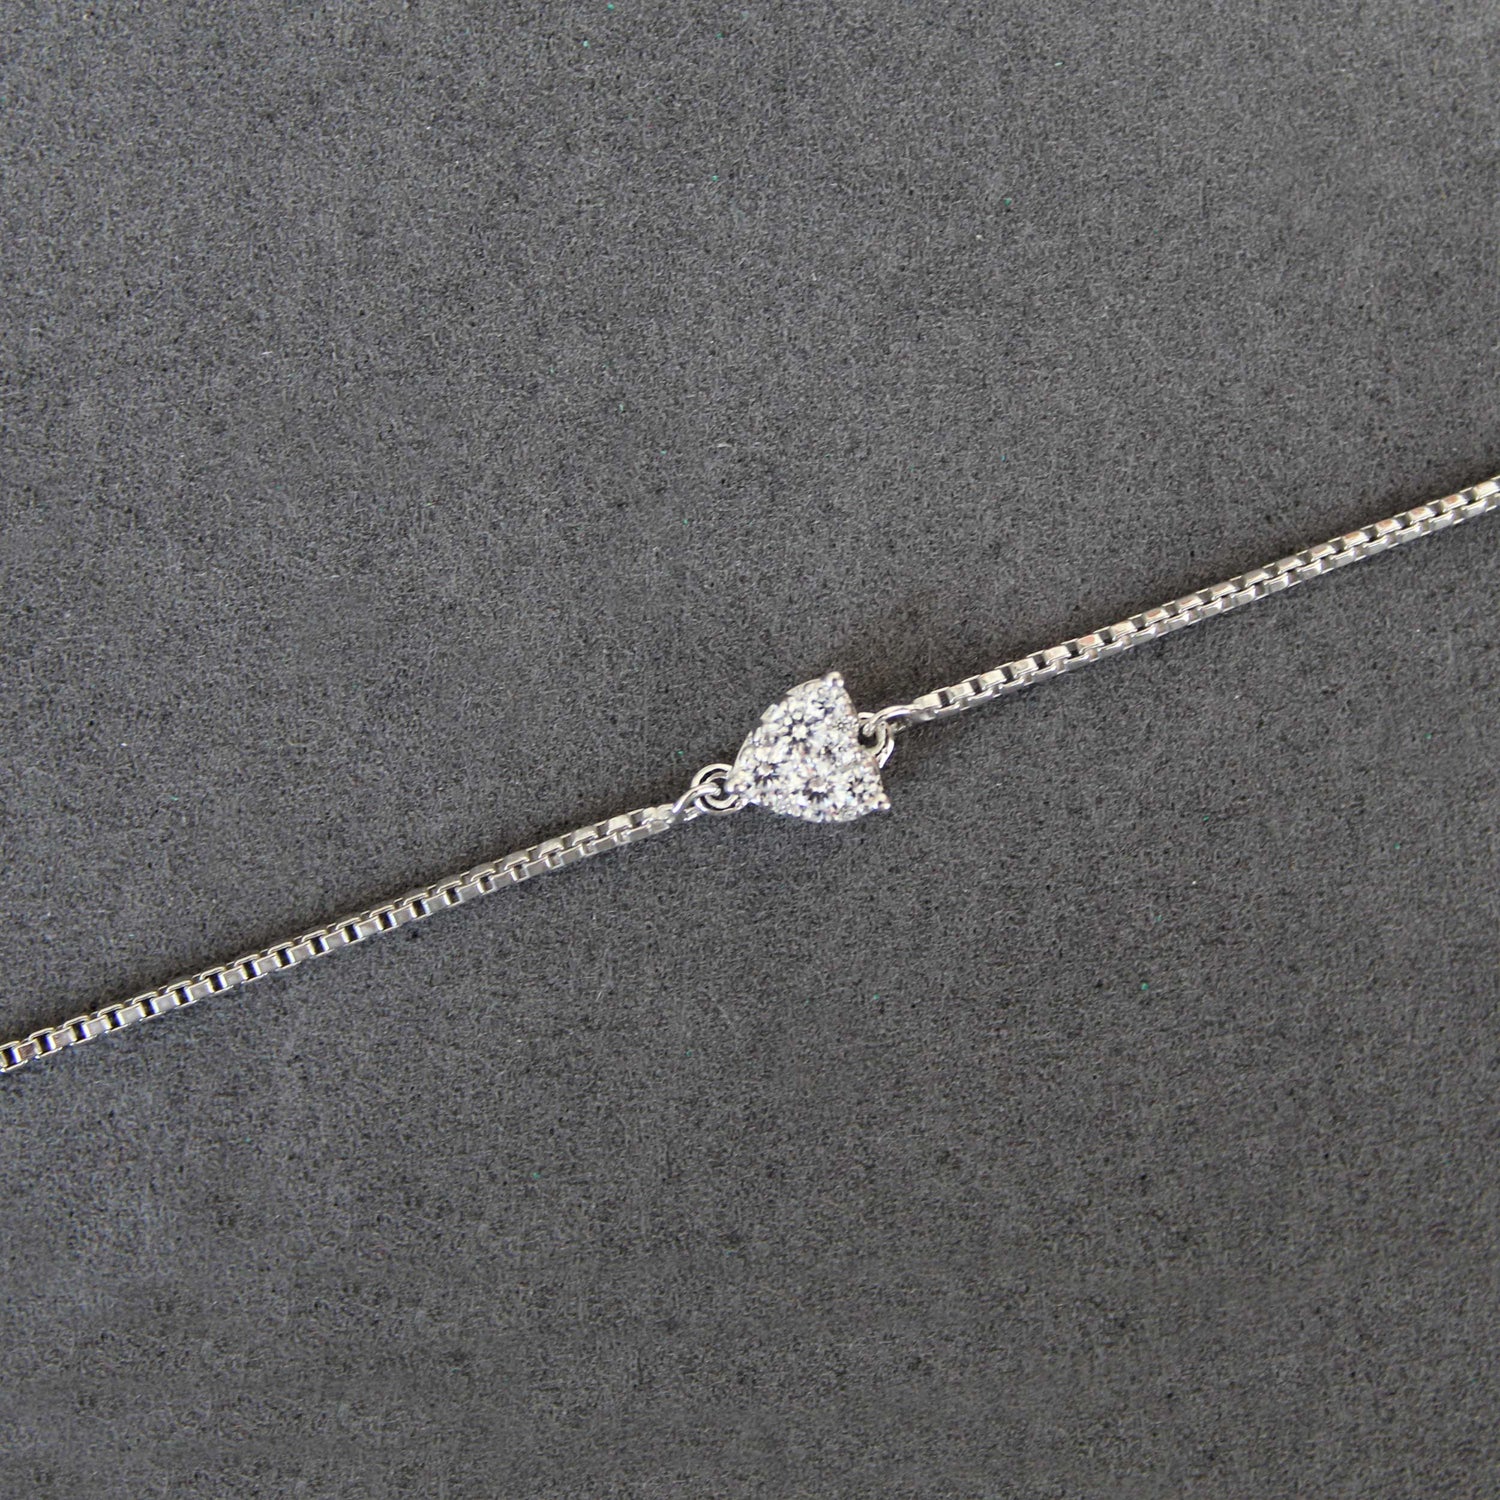 1/4 Cttw Diamond Heart Cluster Adjustable Chain Bracelet in 925 Sterling Silver